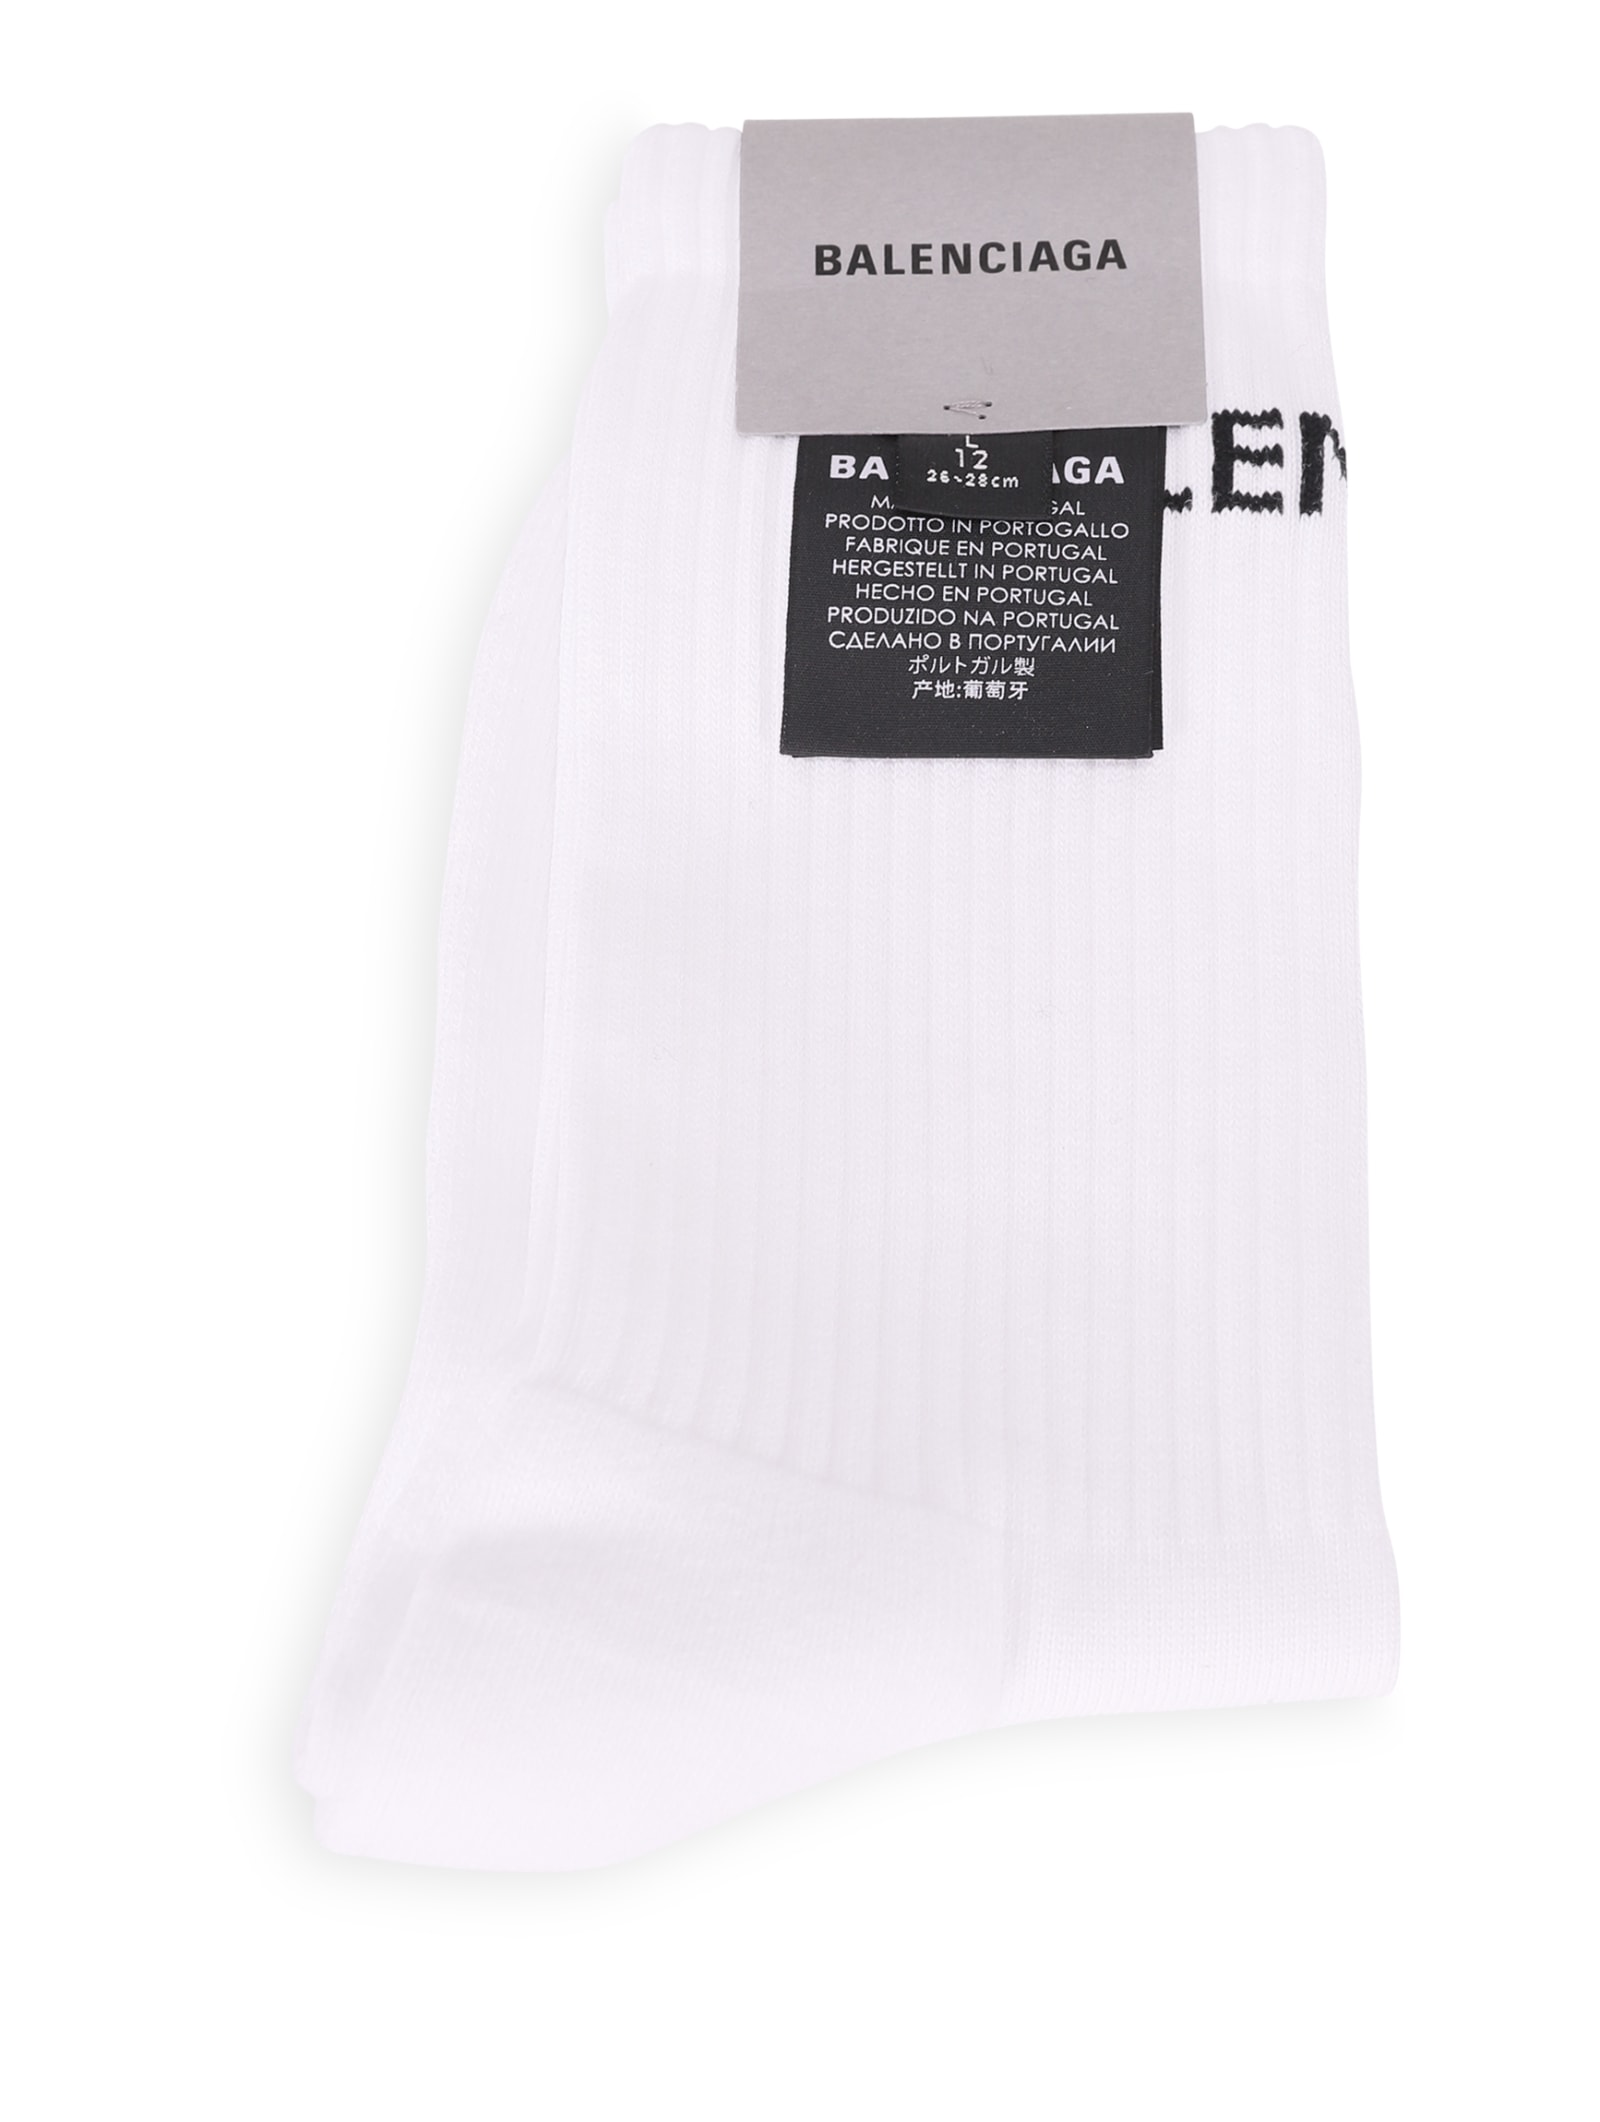 balenciaga white socks